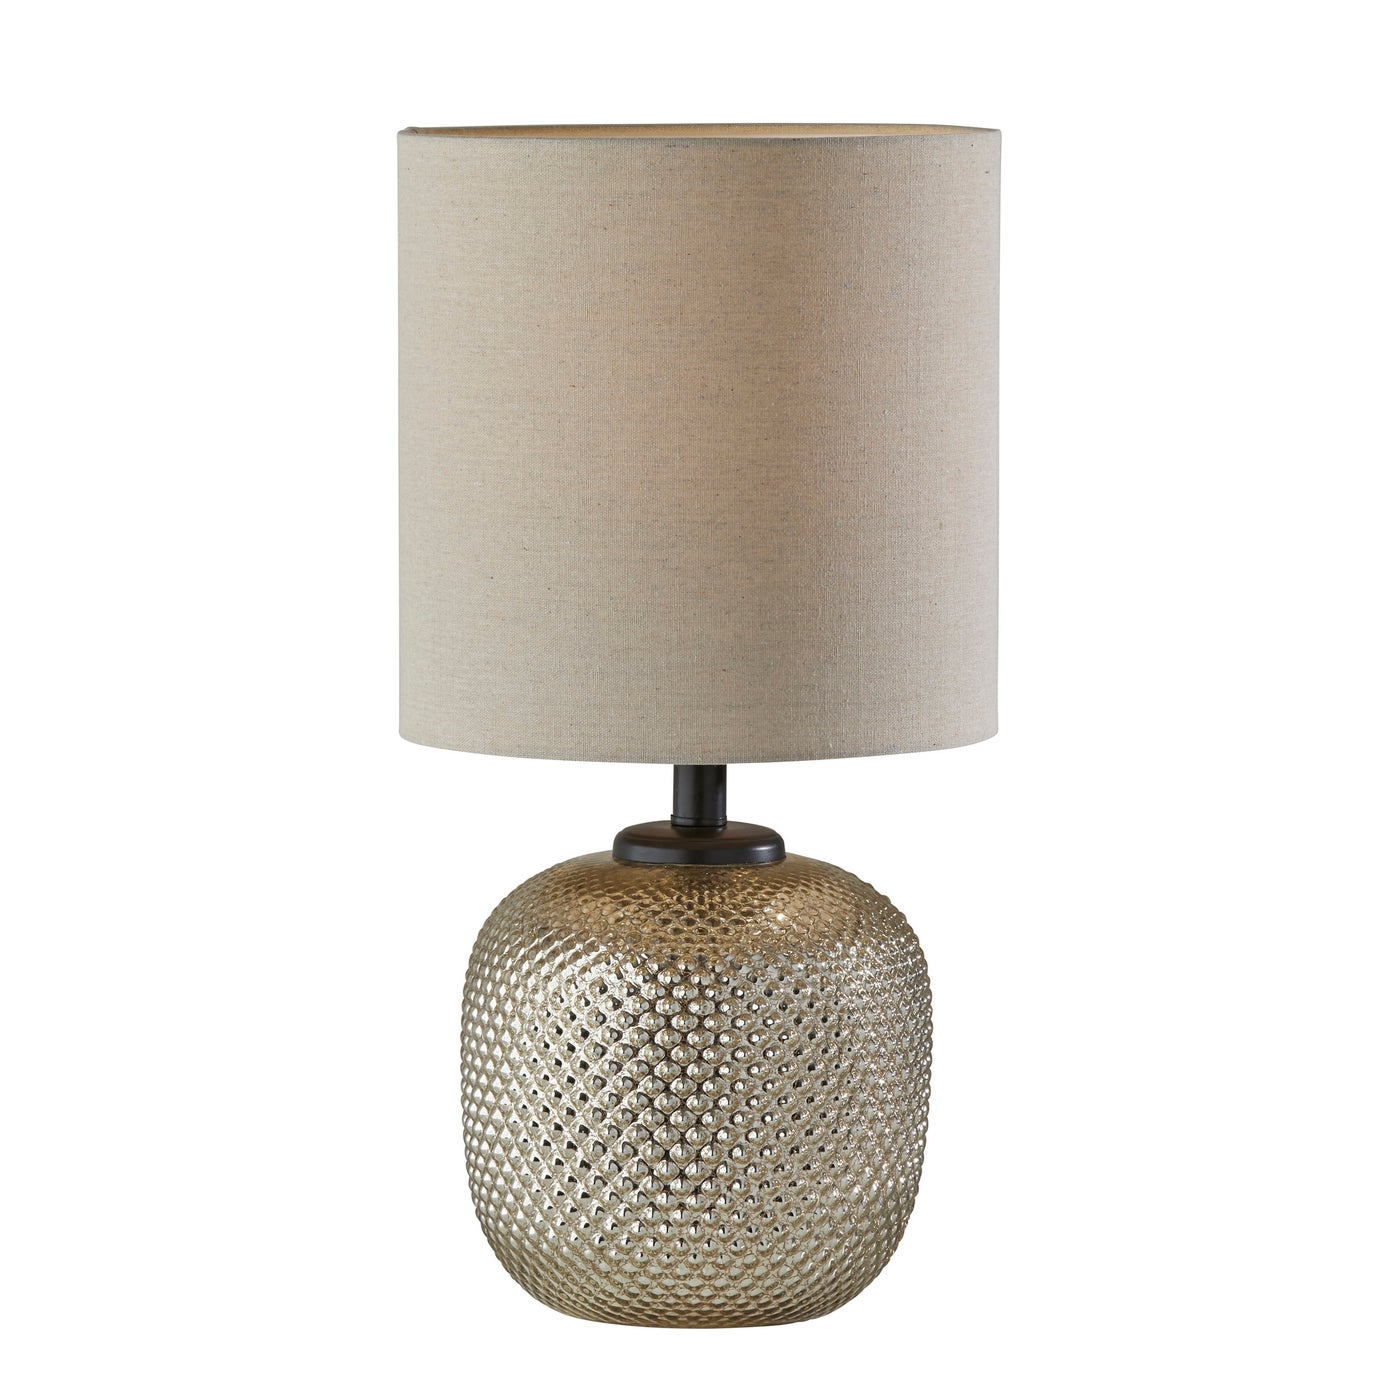 Adesso Home - 3576-26 - Table Lamp - Vivian - Dark Bronze/Cracked Mercury Textured Glass